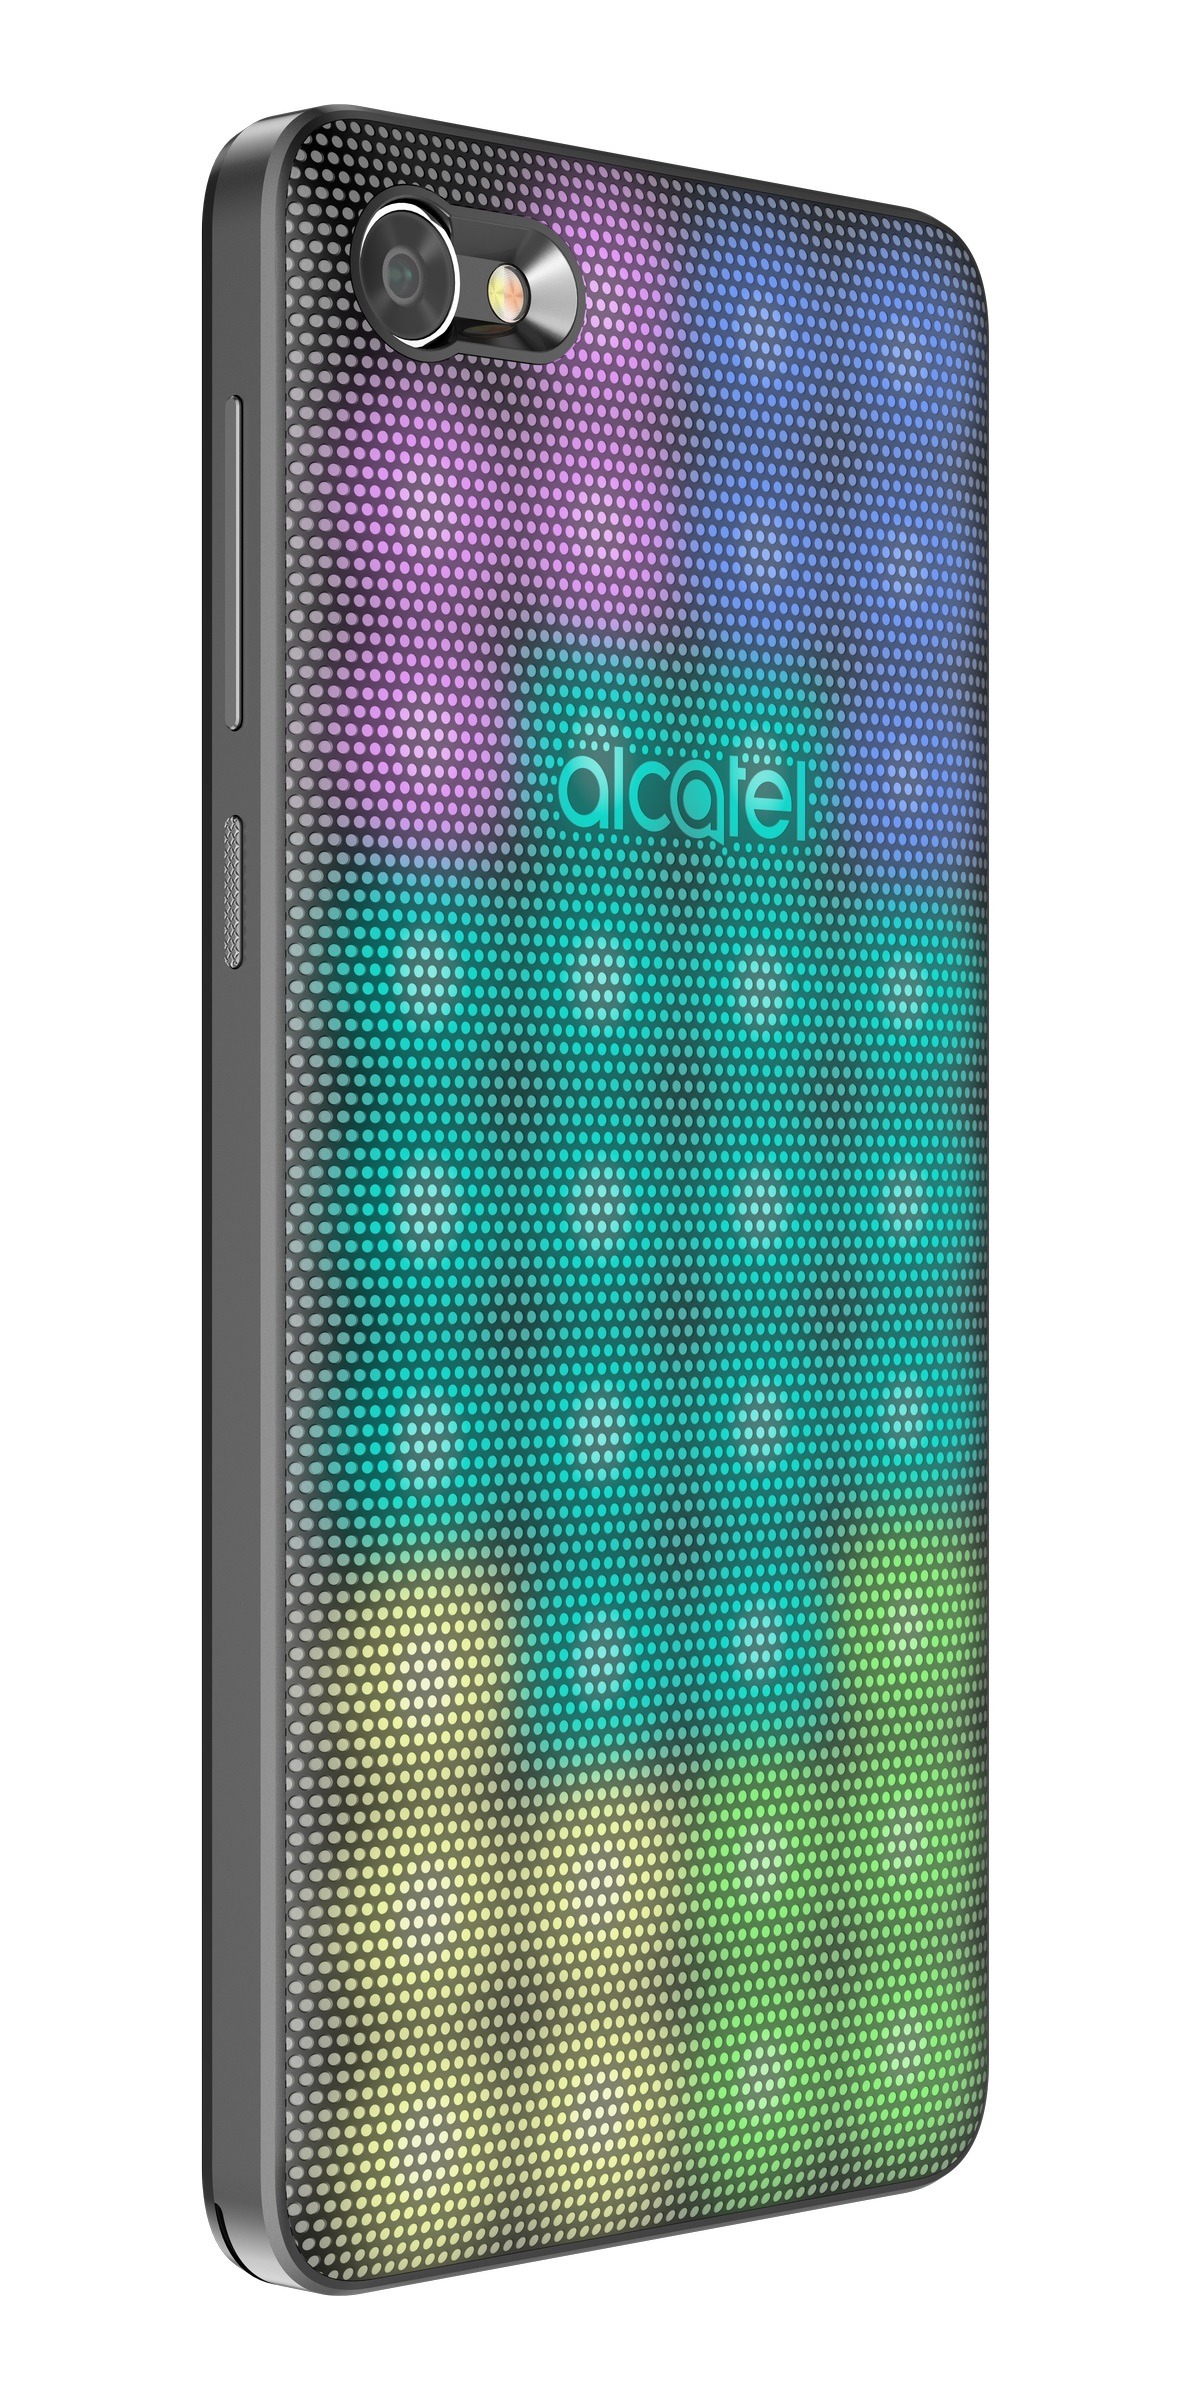 Alcatel A5 LED, un móvil para jóvenes con carcasa iluminada 4